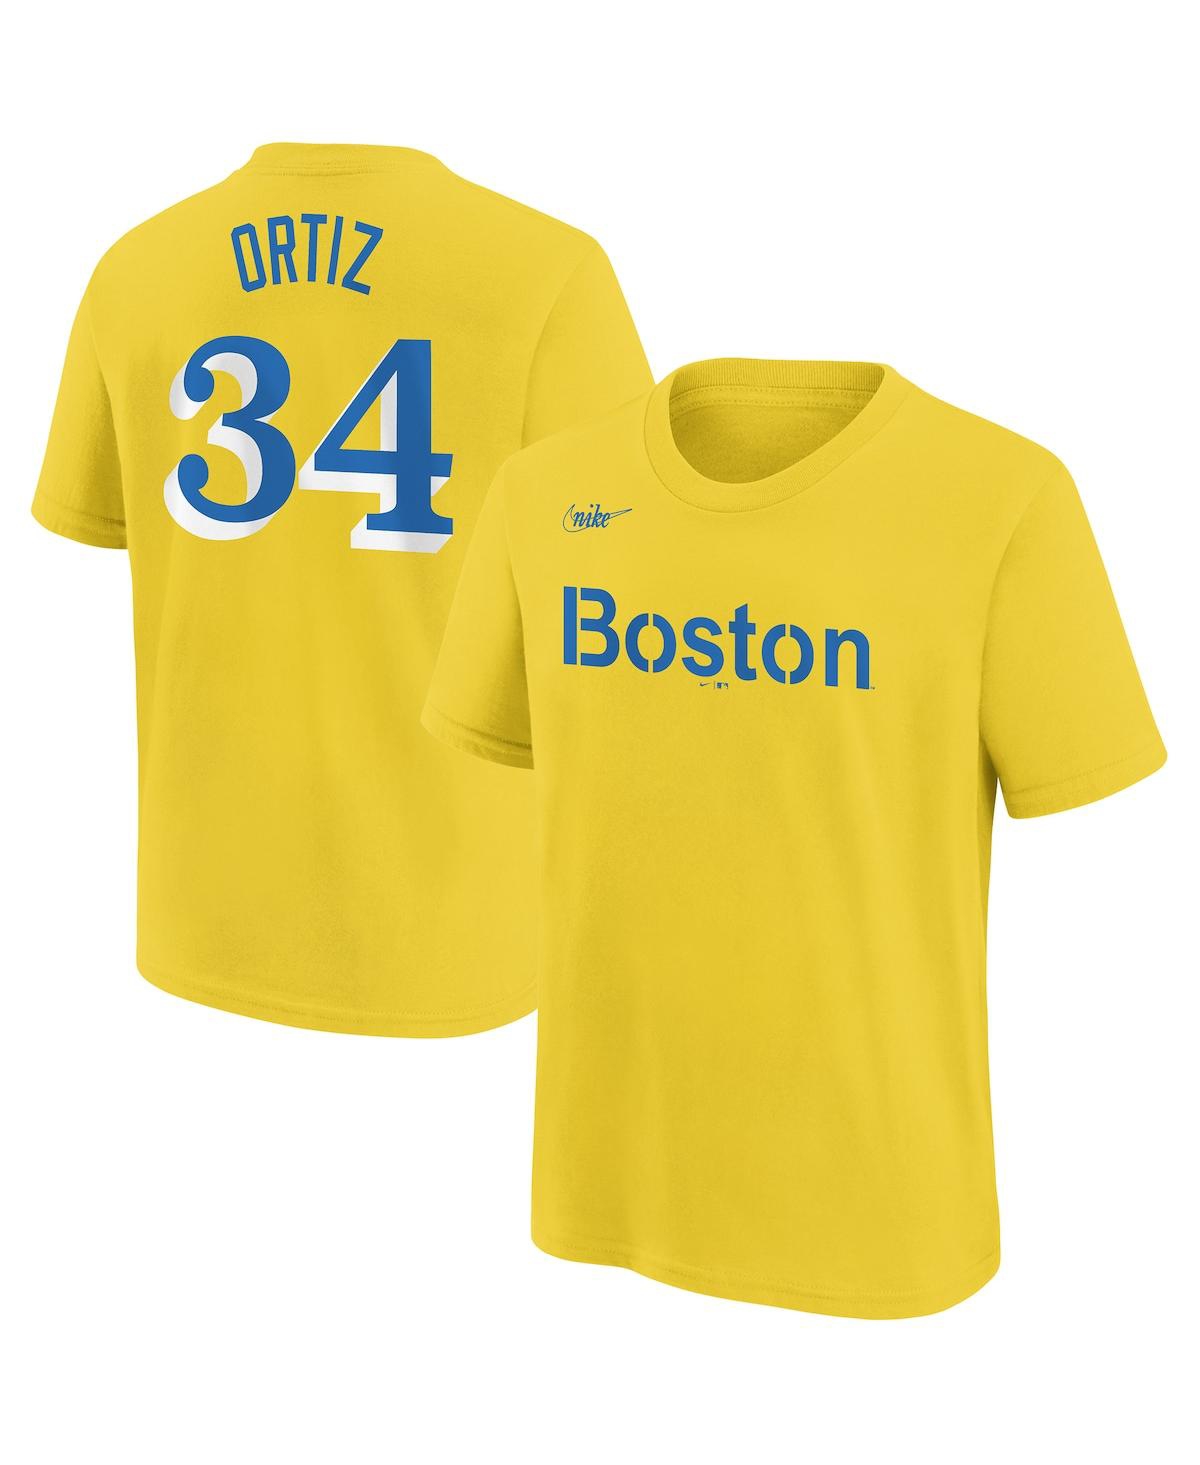 Nike Kids' Big Boys And Girls  David Ortiz Gold Boston Red Sox Name And Number T-shirt